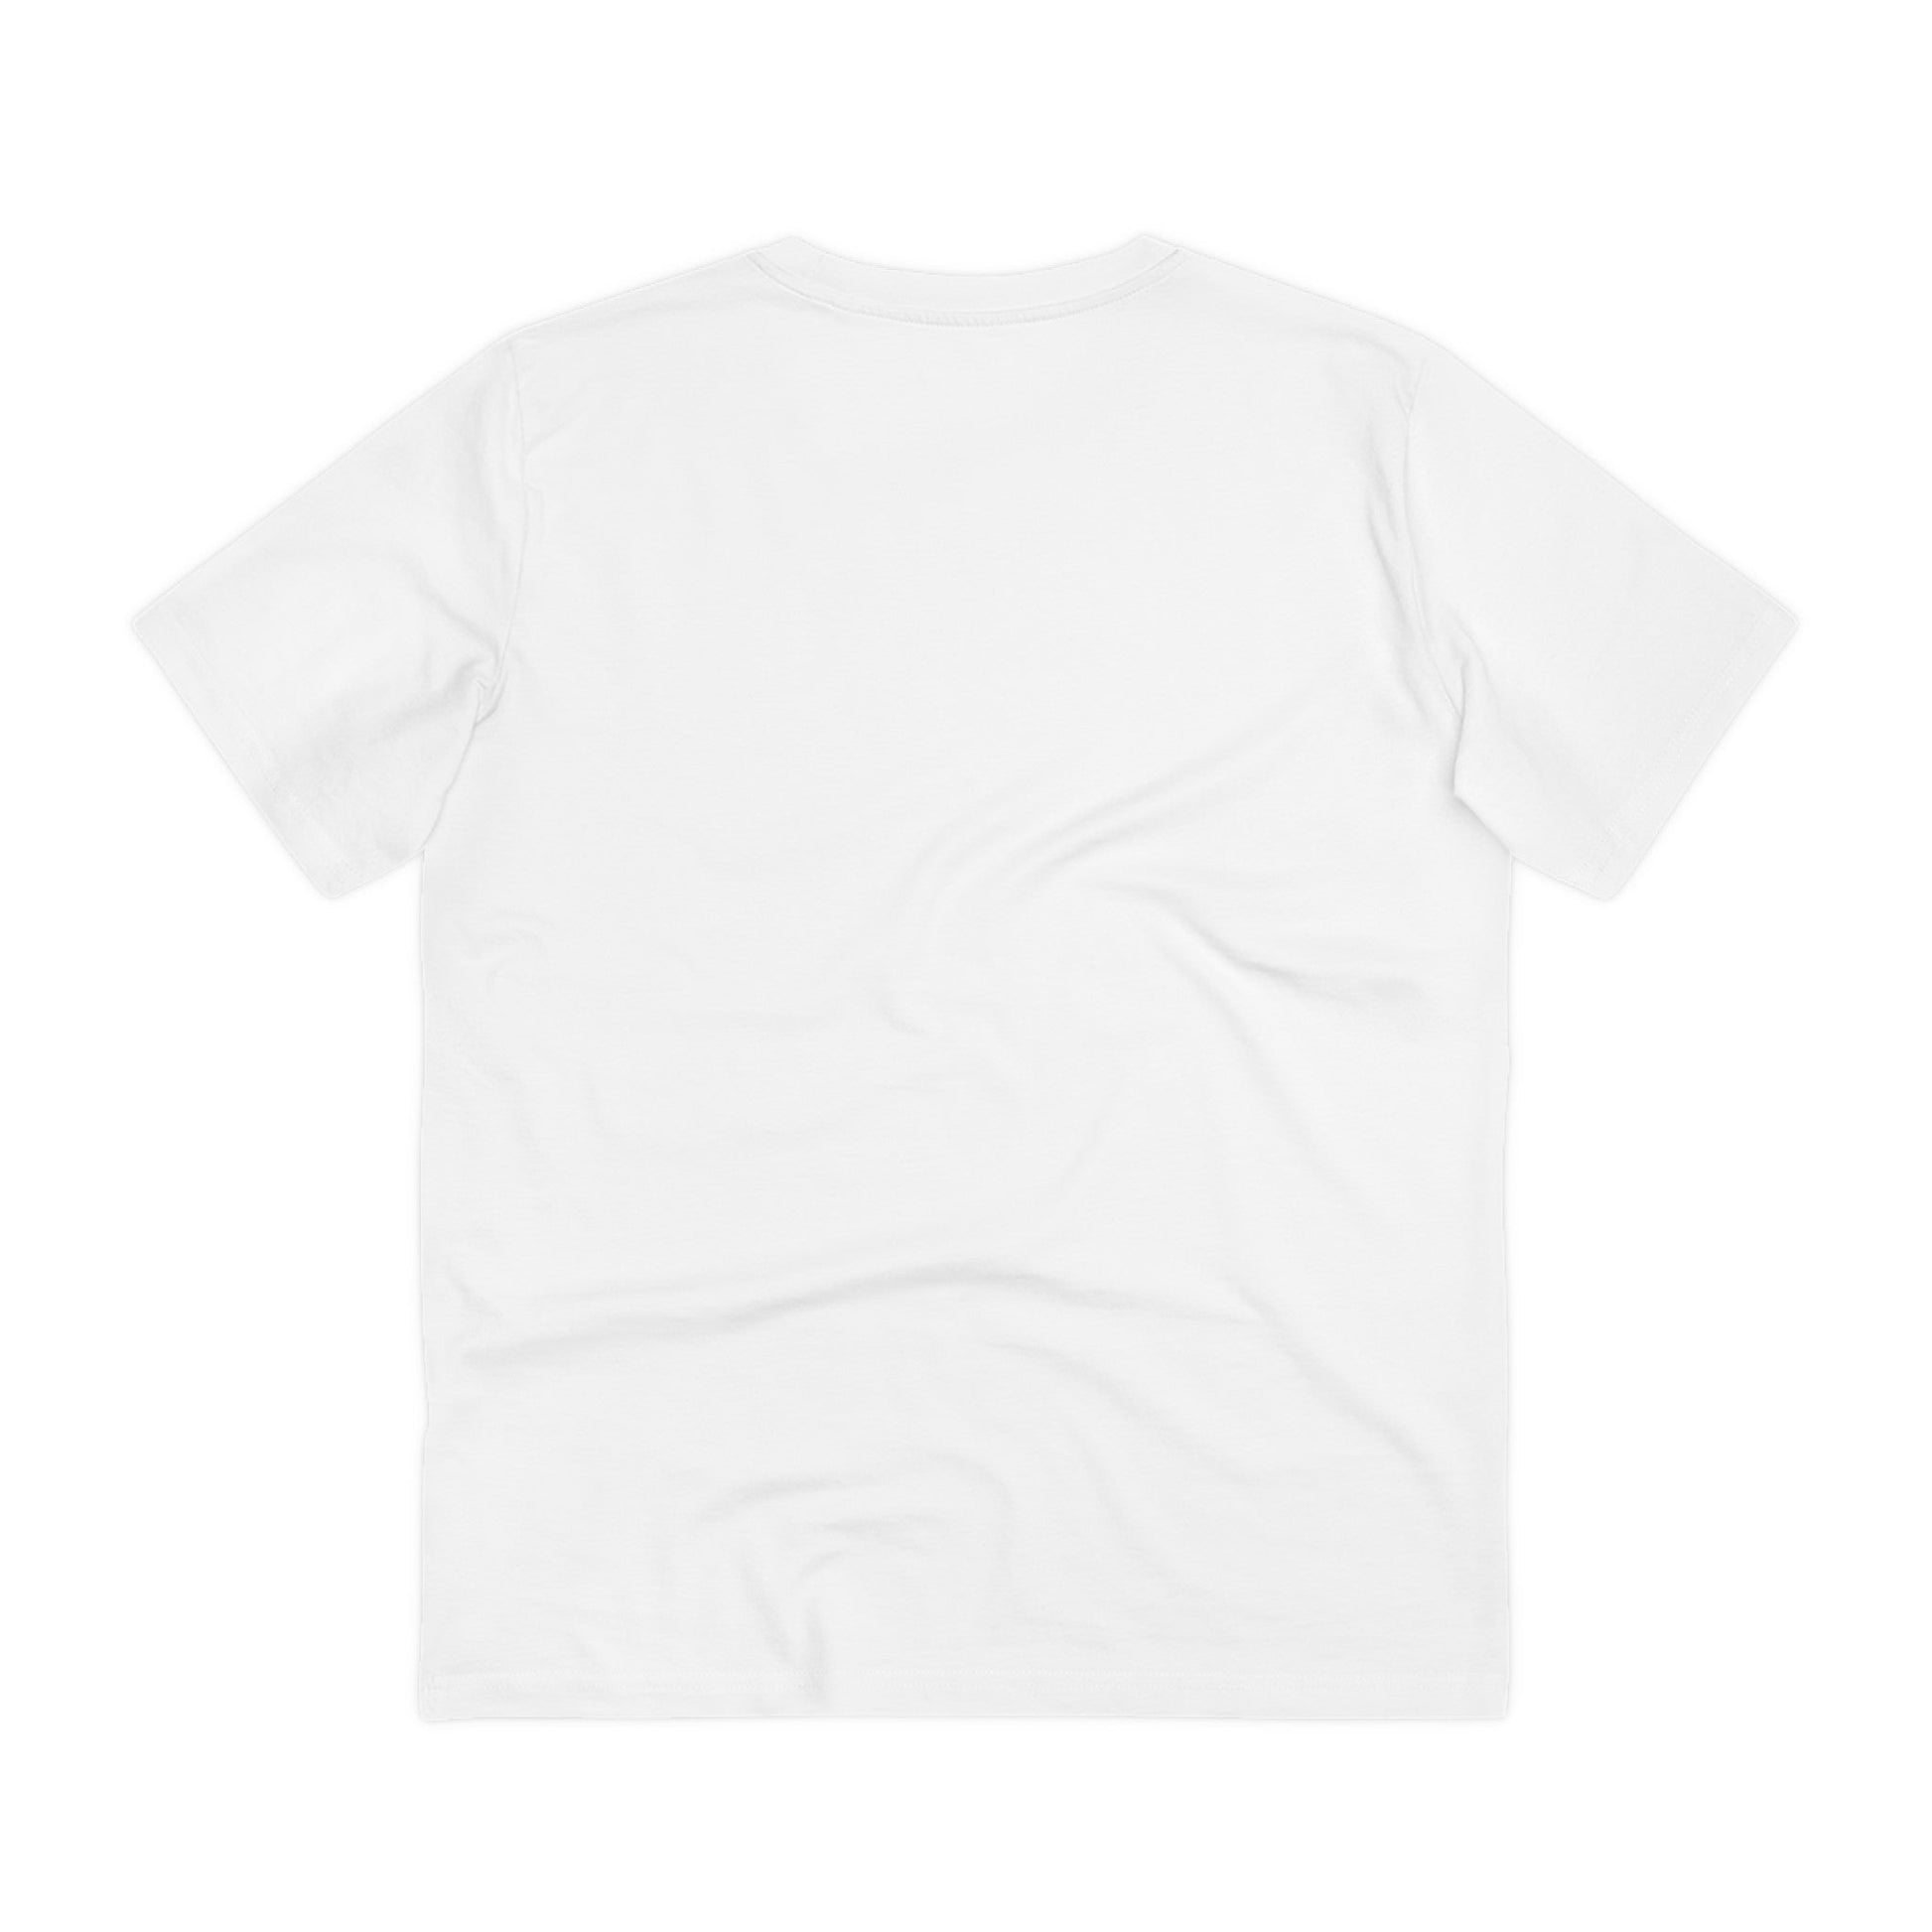 Printify T-Shirt Burning Secrets - Streetwear - King Breaker - Front Design